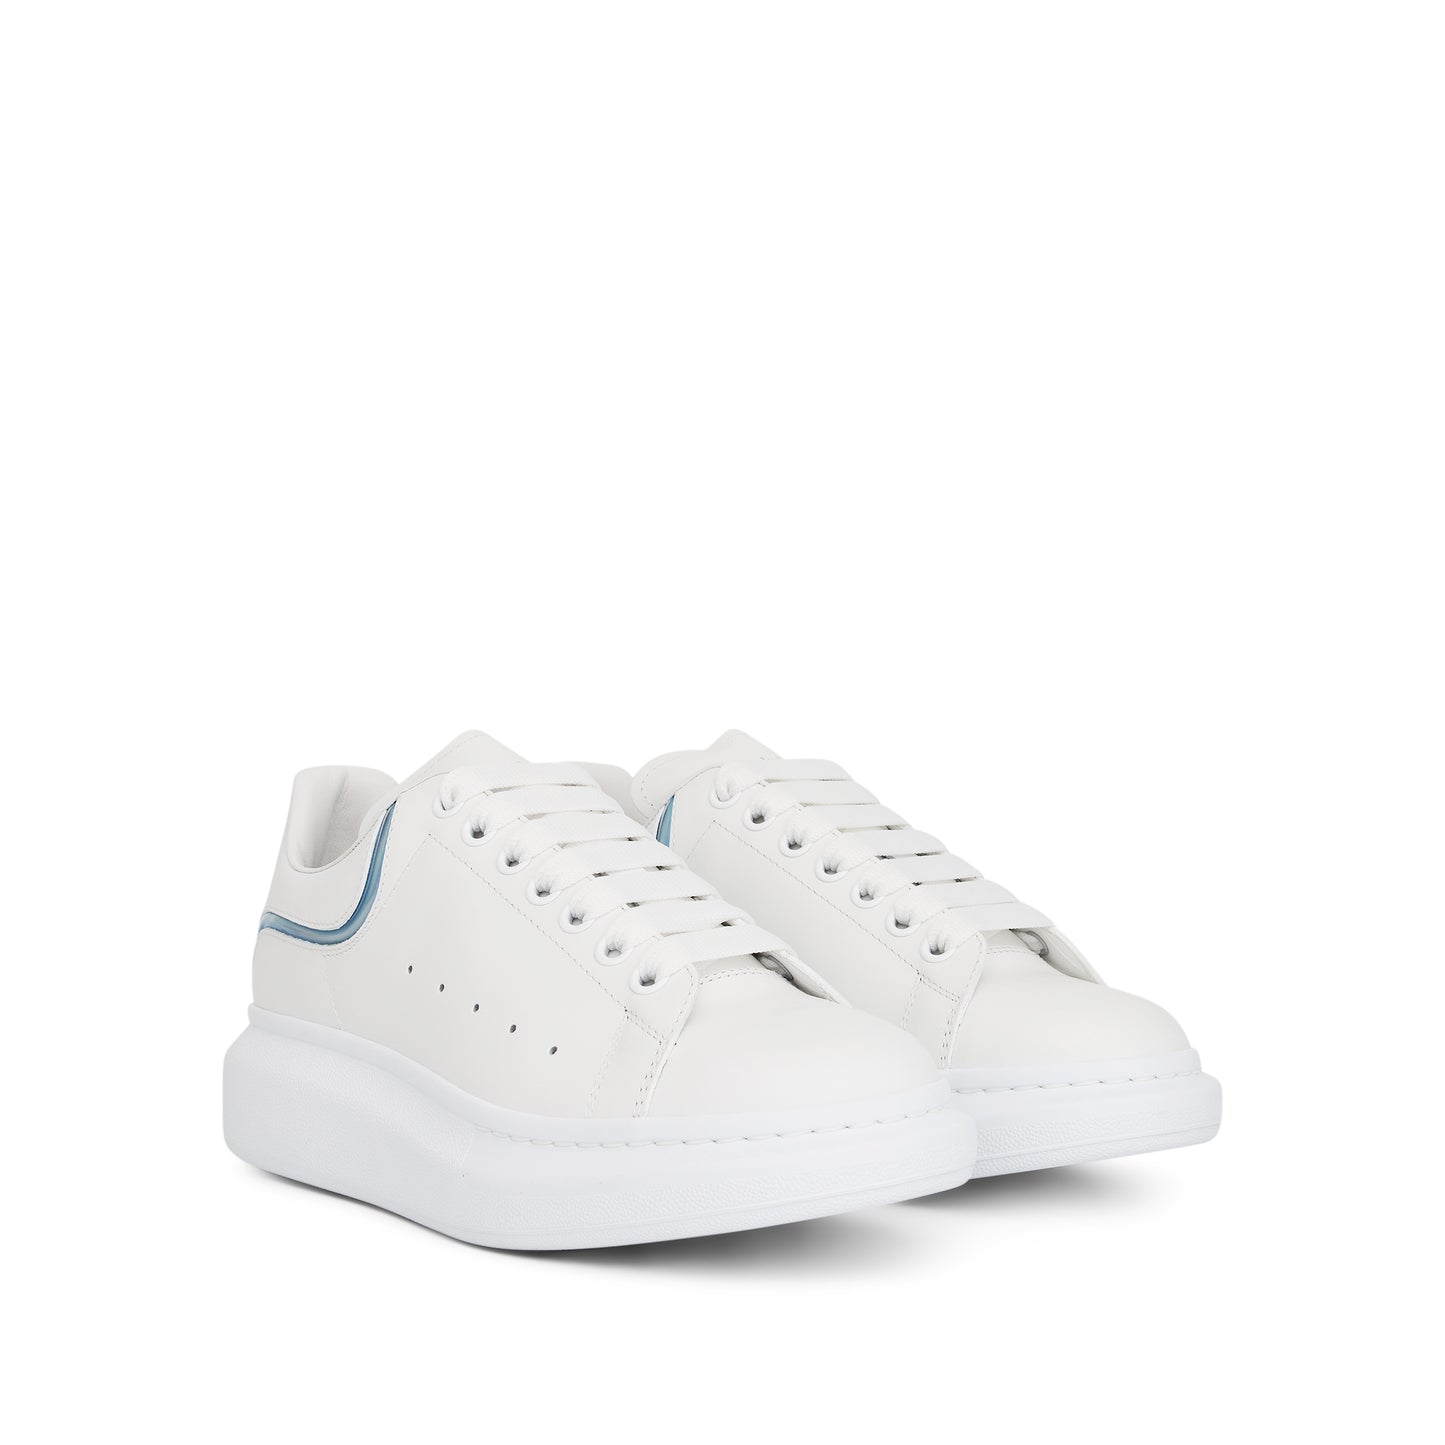 Larry Oversized Sneaker in White/Blue